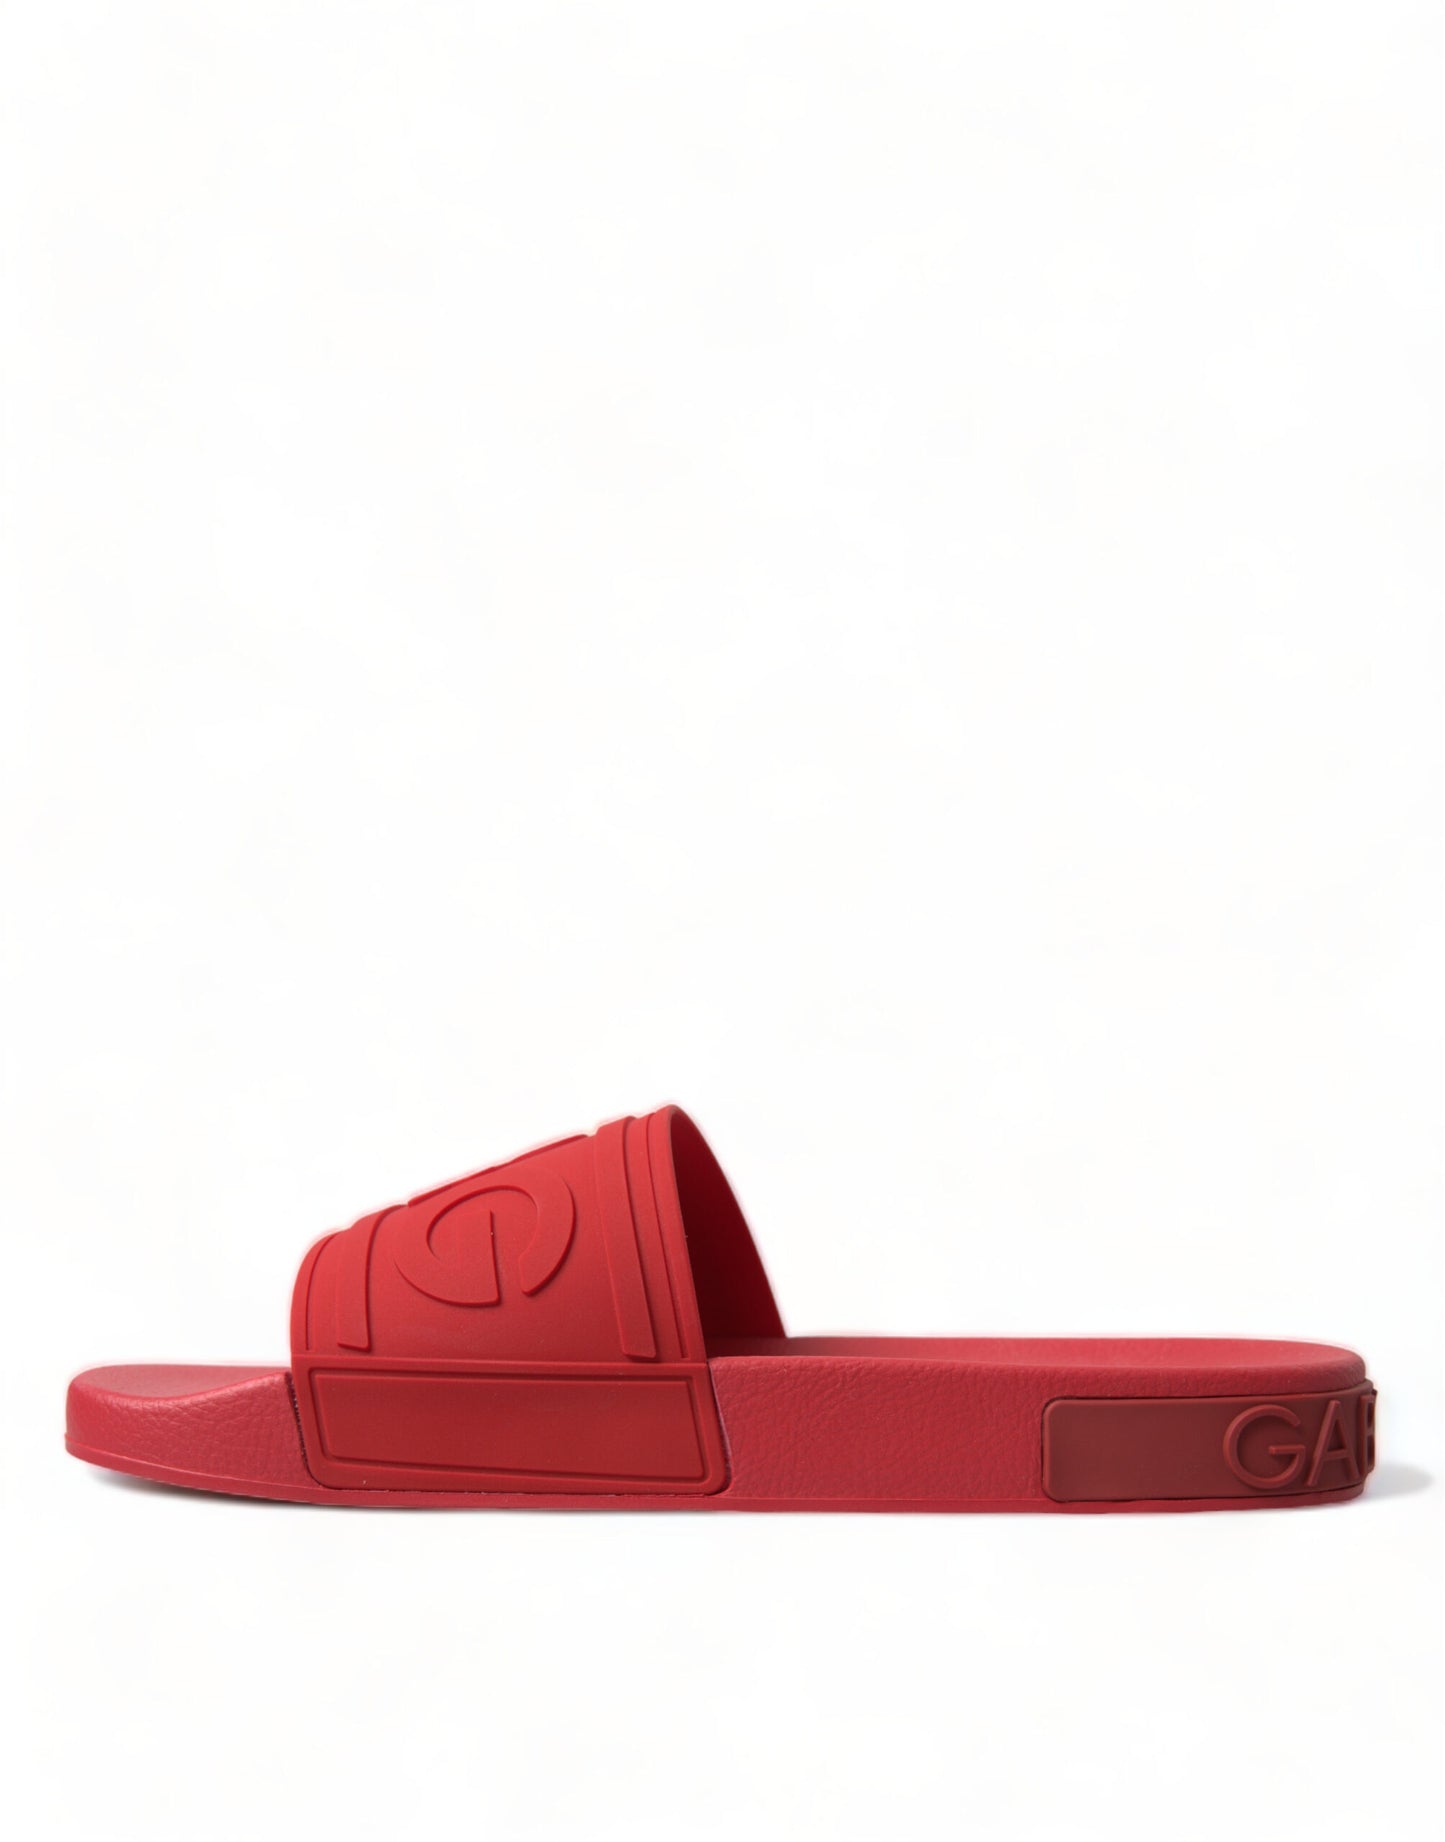 Dolce & Gabbana Red Rubber Summer Beach Slides Sandals - DEA STILOSA MILANO